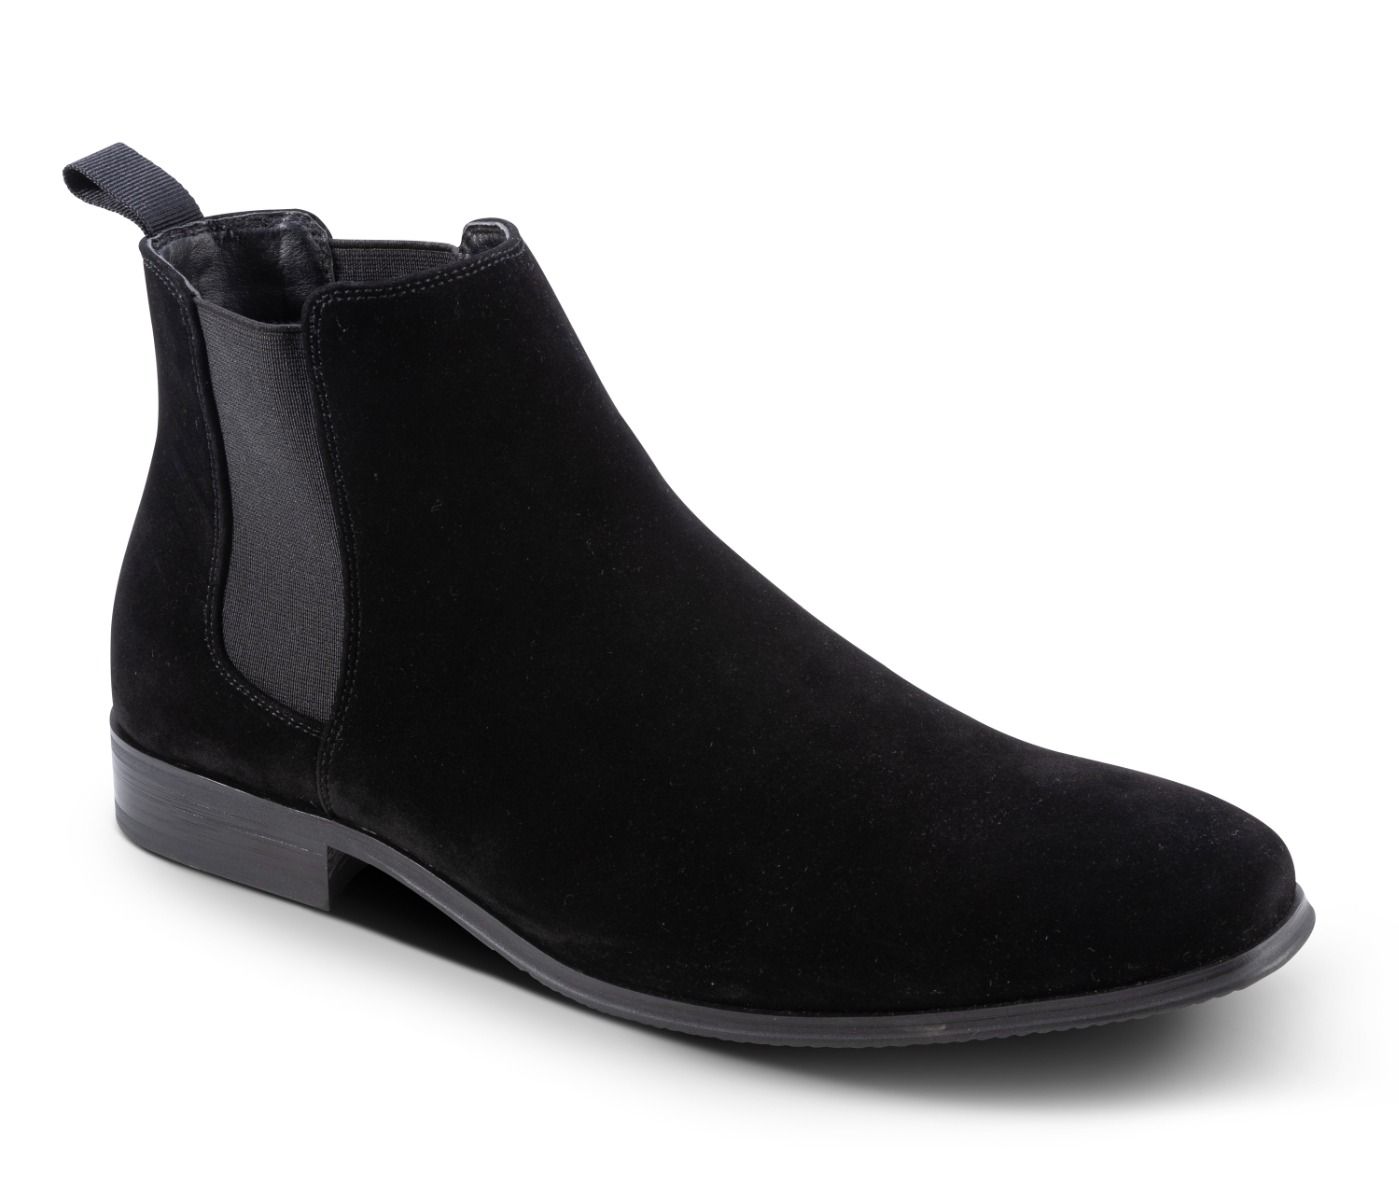 Montique Men's Fashion Chelsea Boot - Soft Velvet